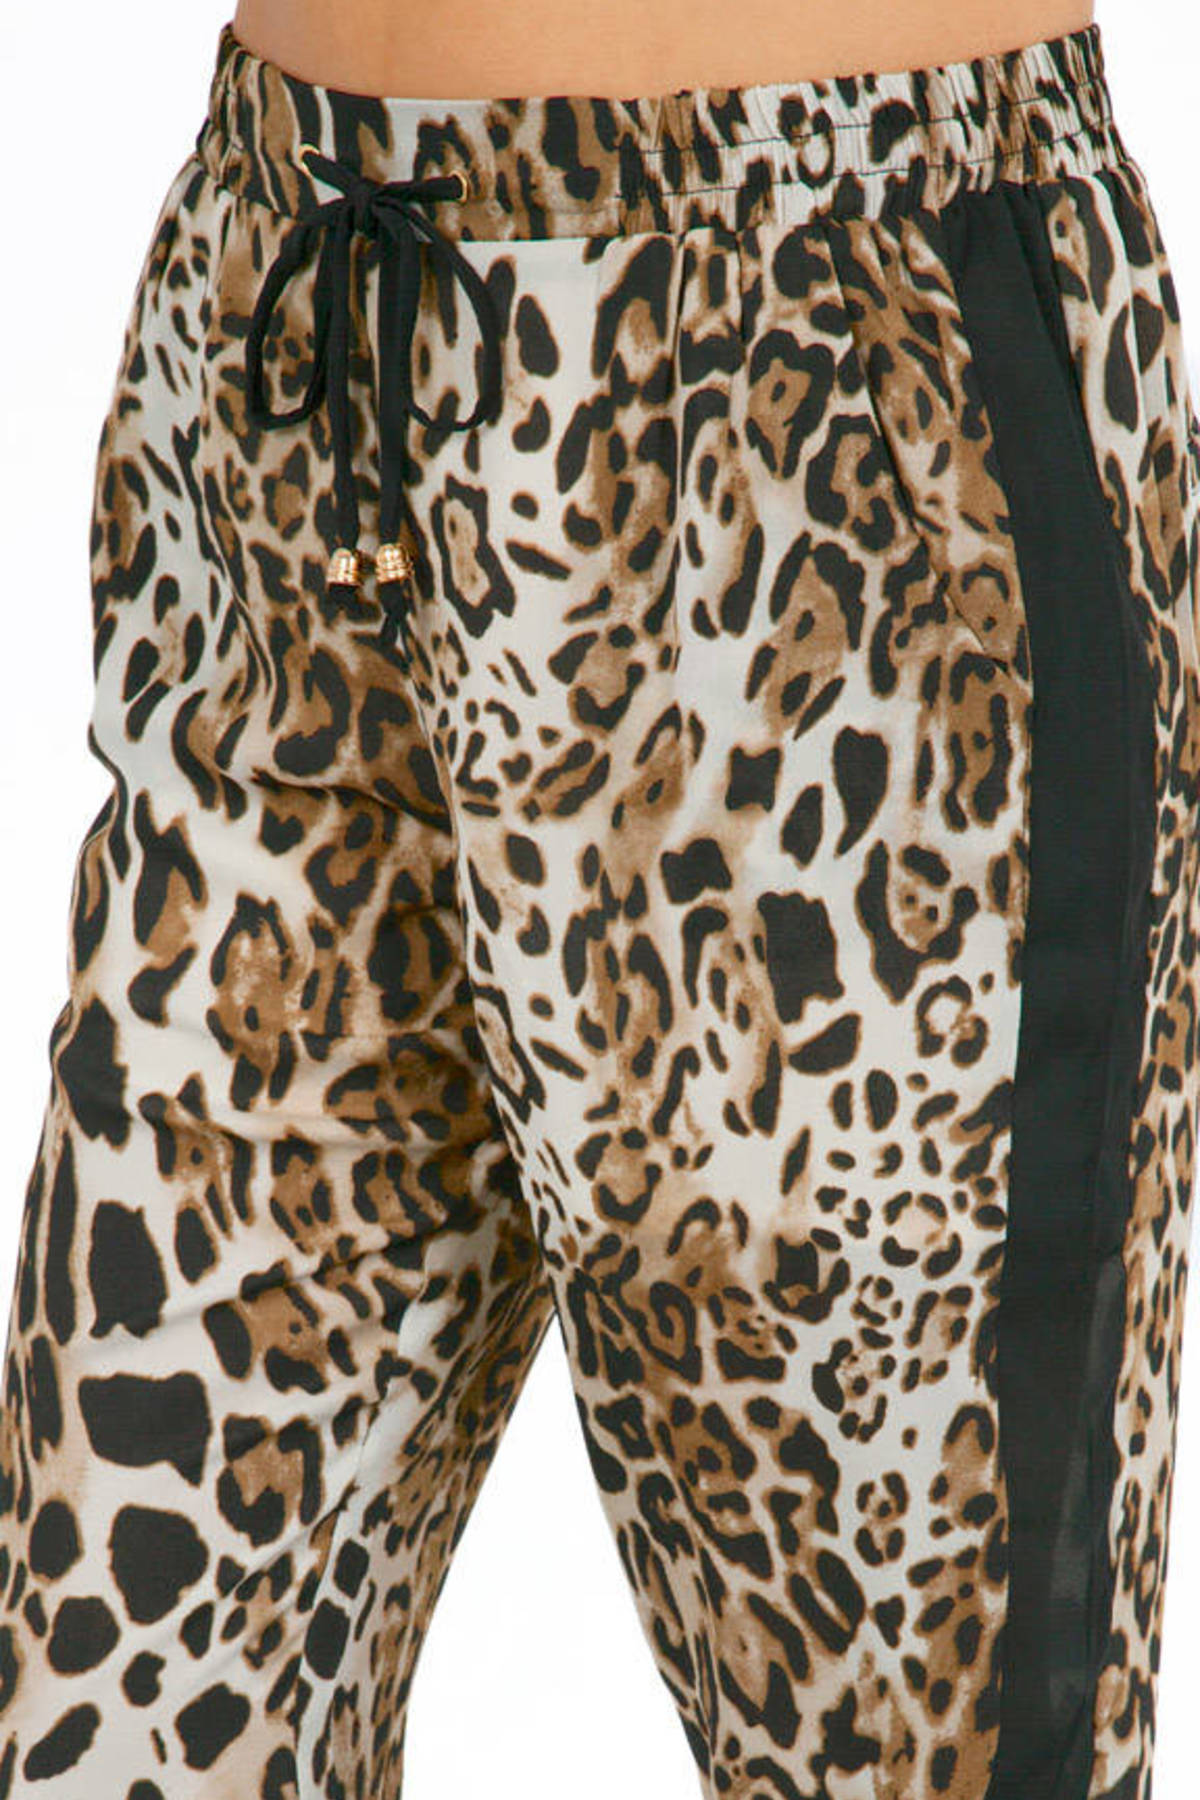 Missing Lynx Pants in Black/Leopard - $30 | Tobi US